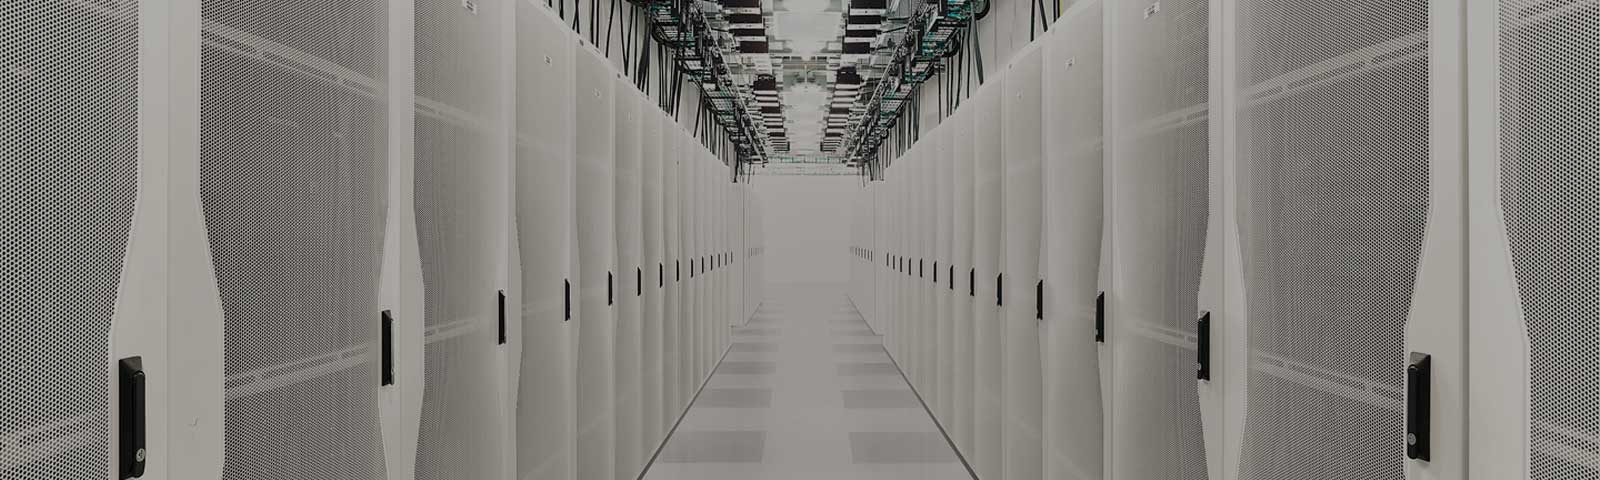 Secure Data Center